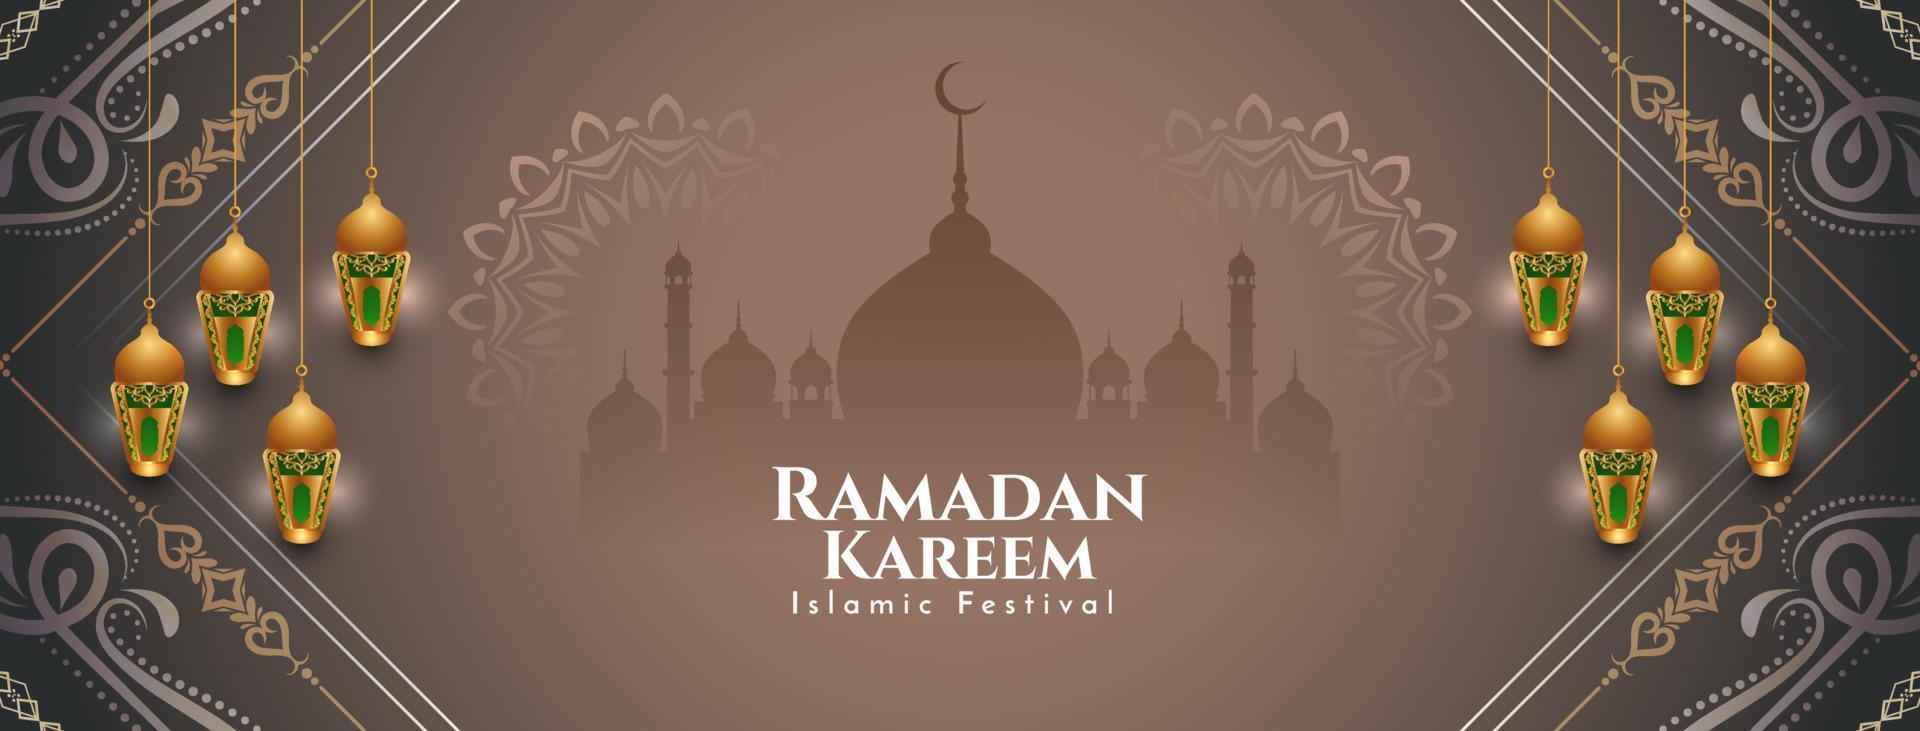 design de banner do festival tradicional islâmico ramadan kareem vetor